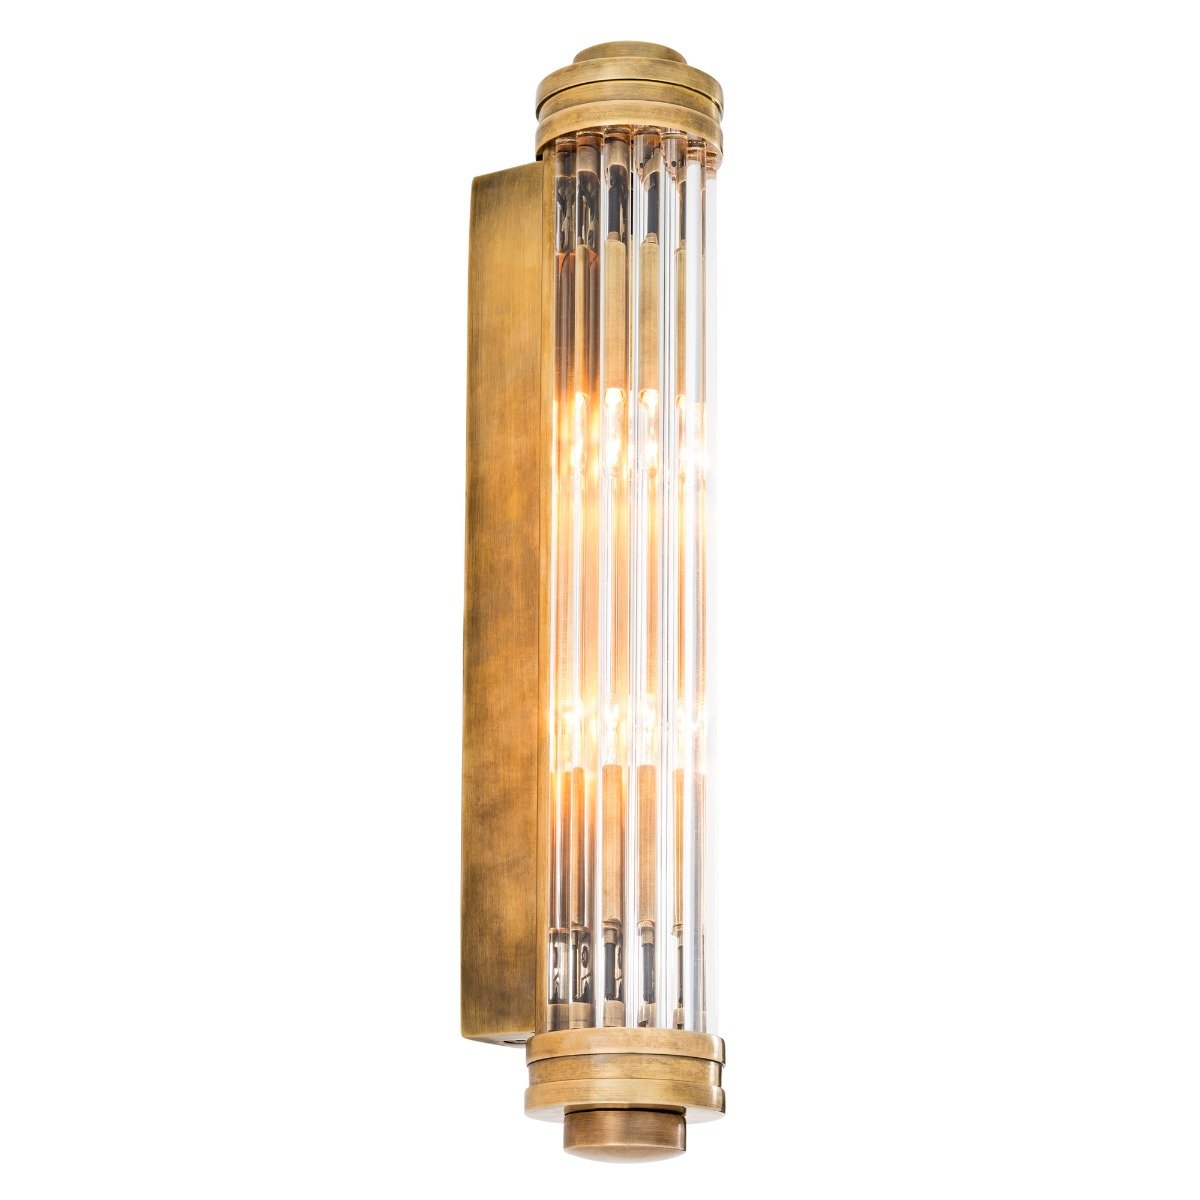 Eichholtz Gascogne S Wall Lamp, Gold | Barker & Stonehouse